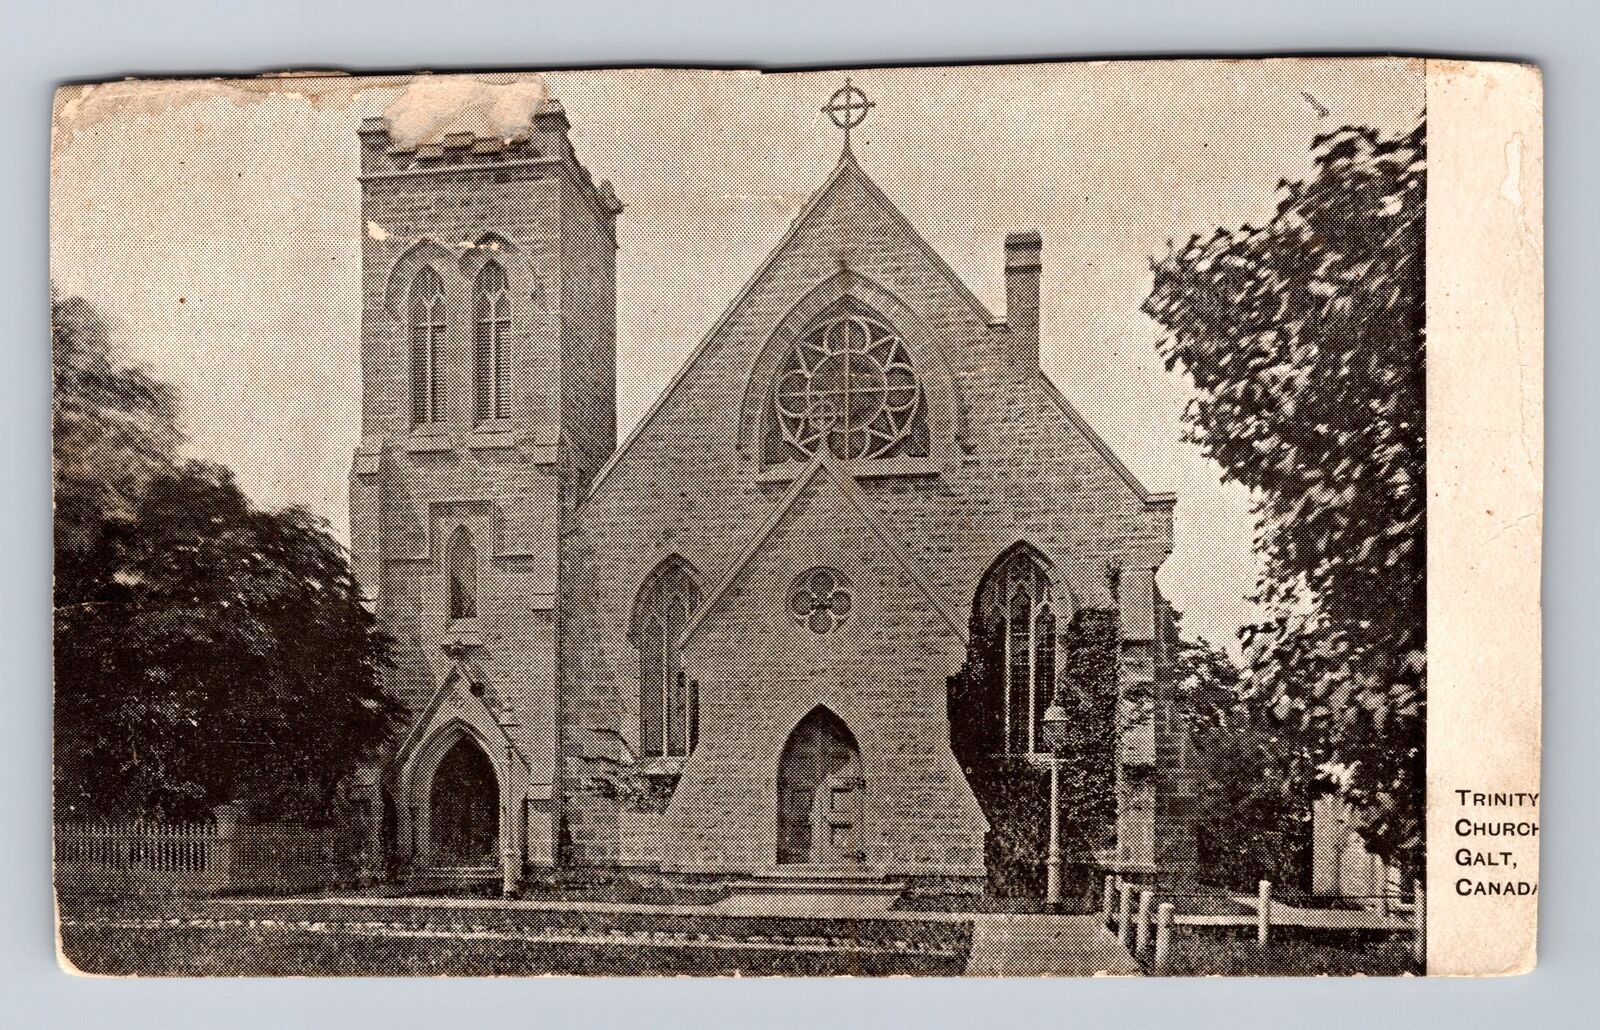 Galt Cambridge Waterloo Canada, Trinity Church, Antique Vintage Postcard